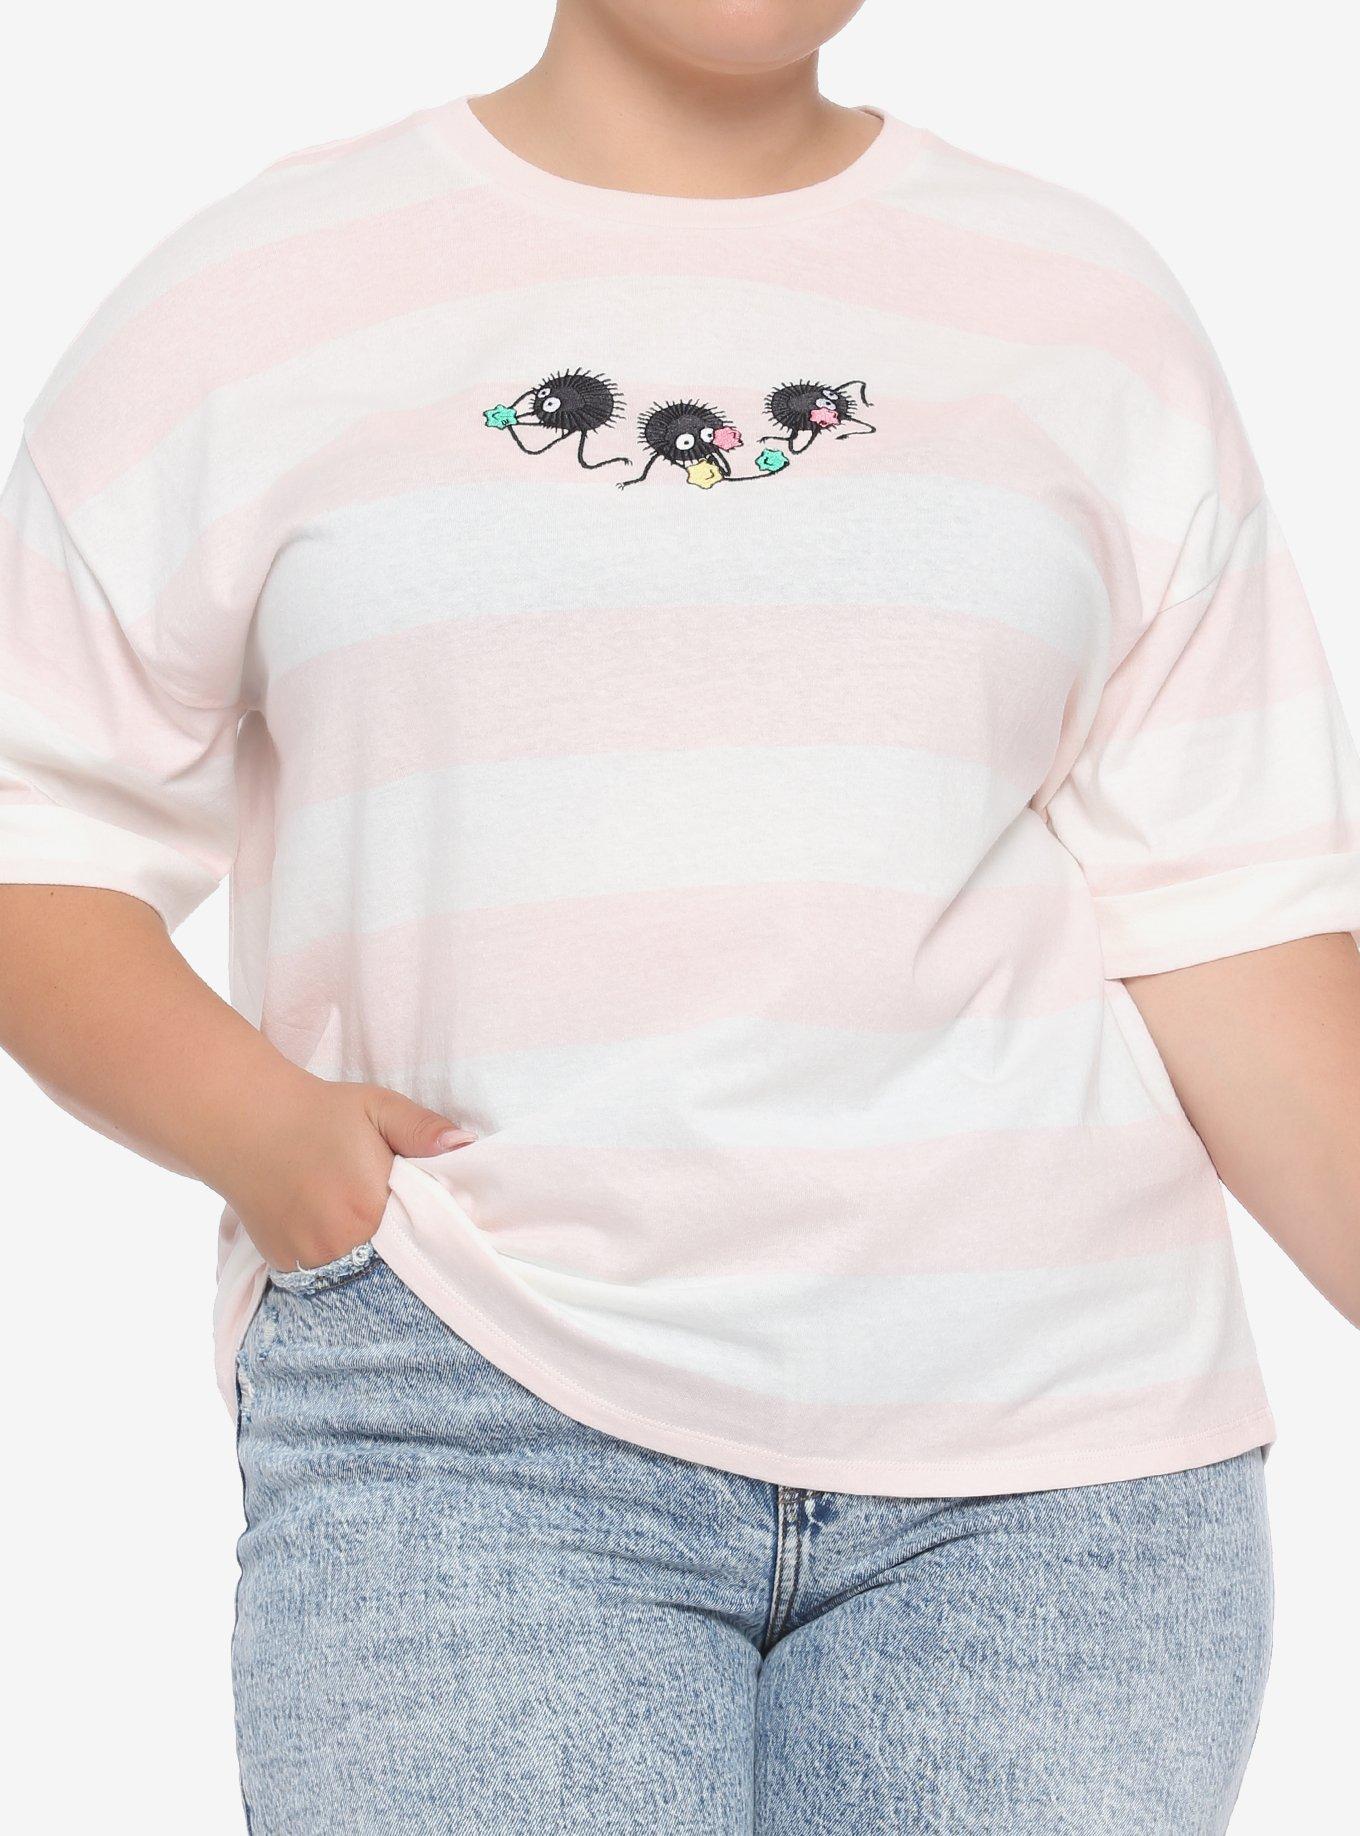 Studio Ghibli Spirited Away Soot Sprite Stripe Girls Crop T-Shirt Plus Size, MULTI, hi-res